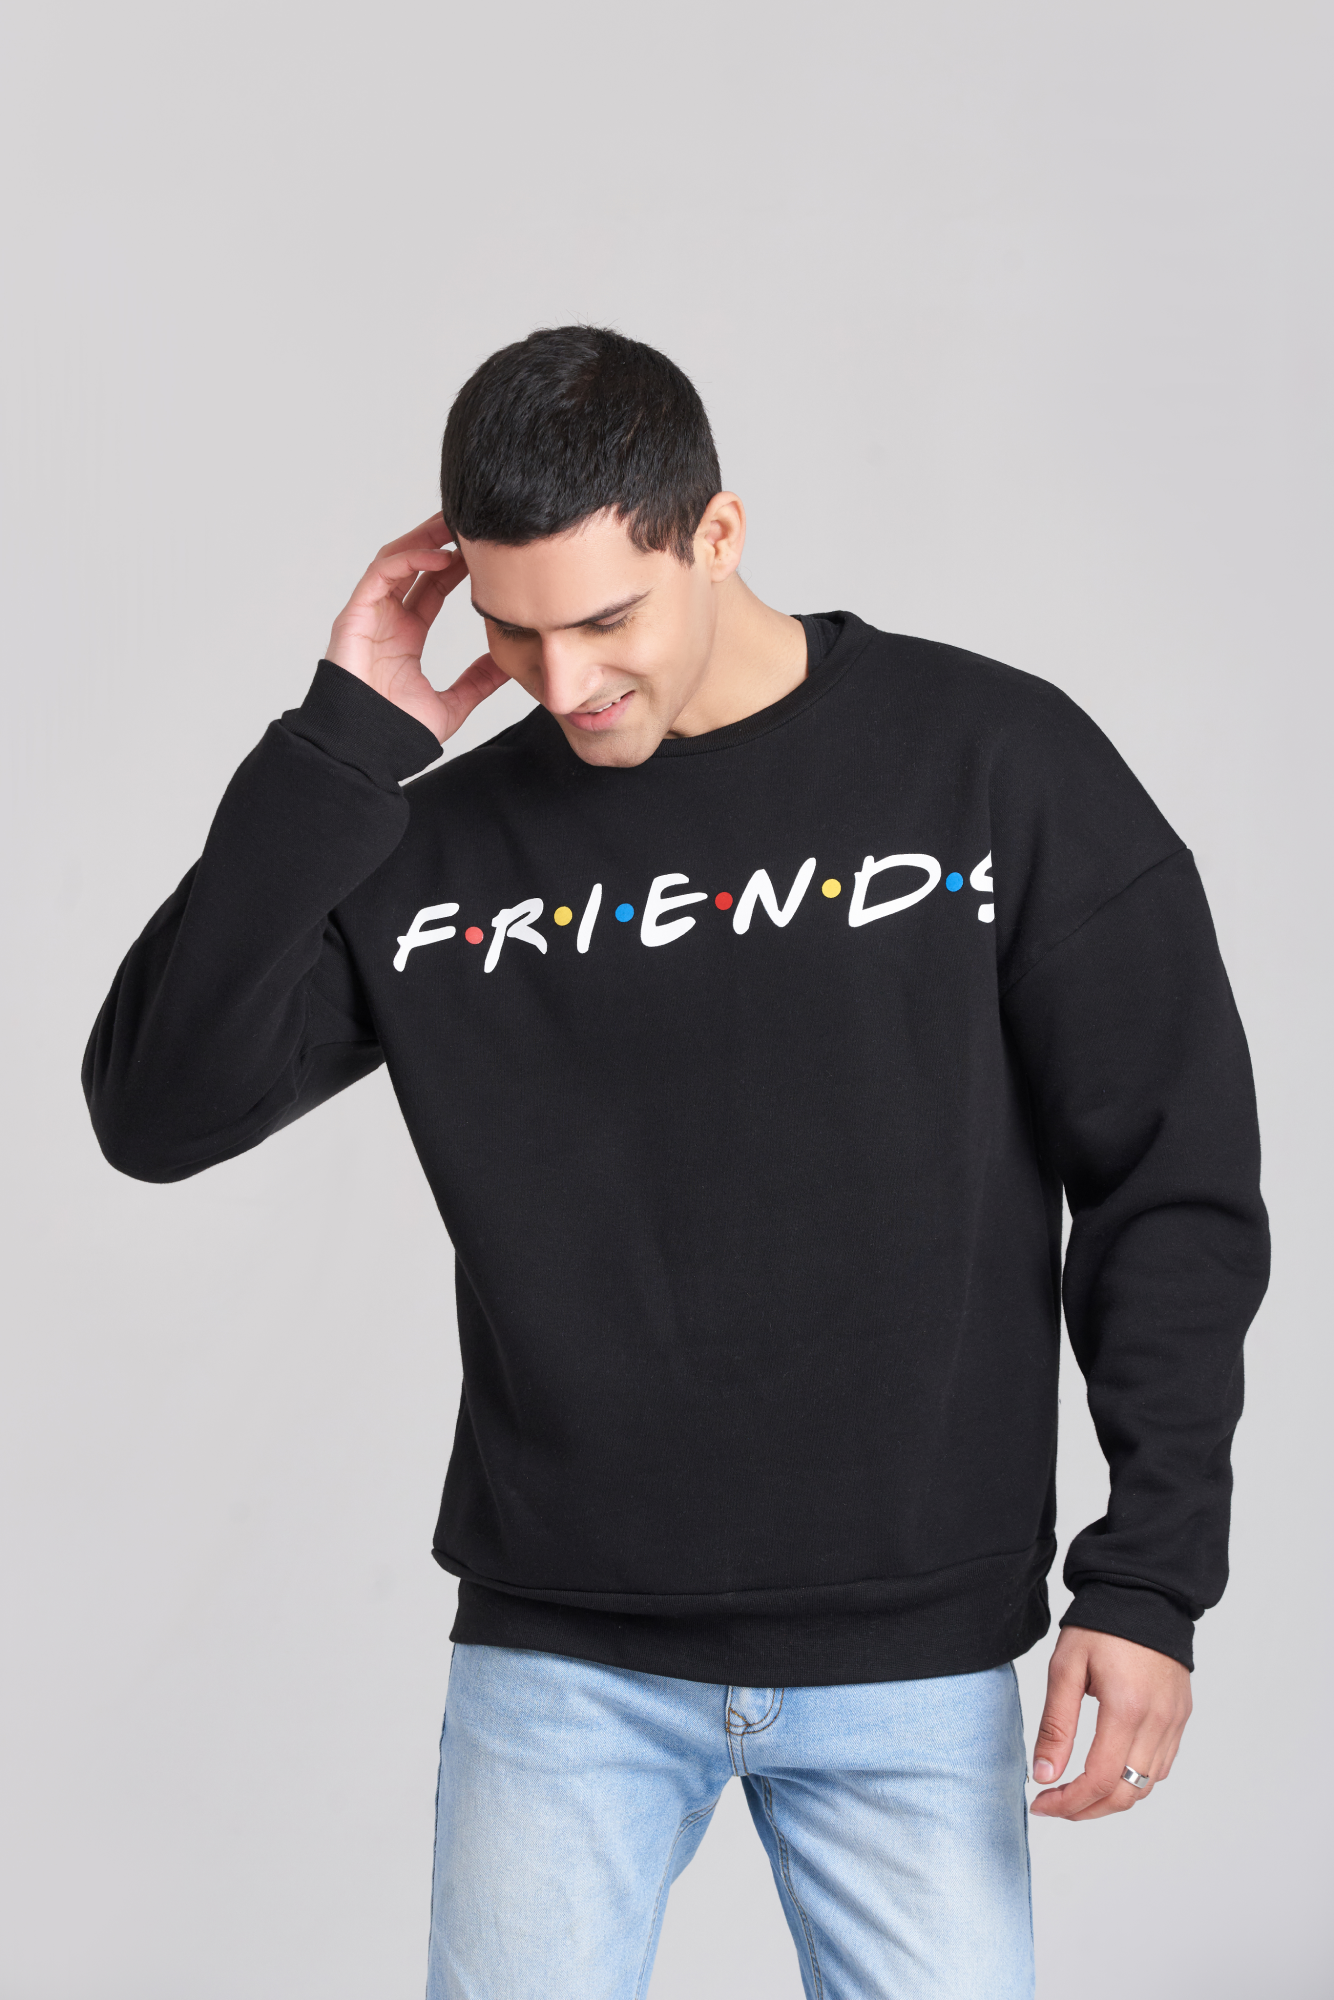 Friends Oversized Sweatshirt - Men